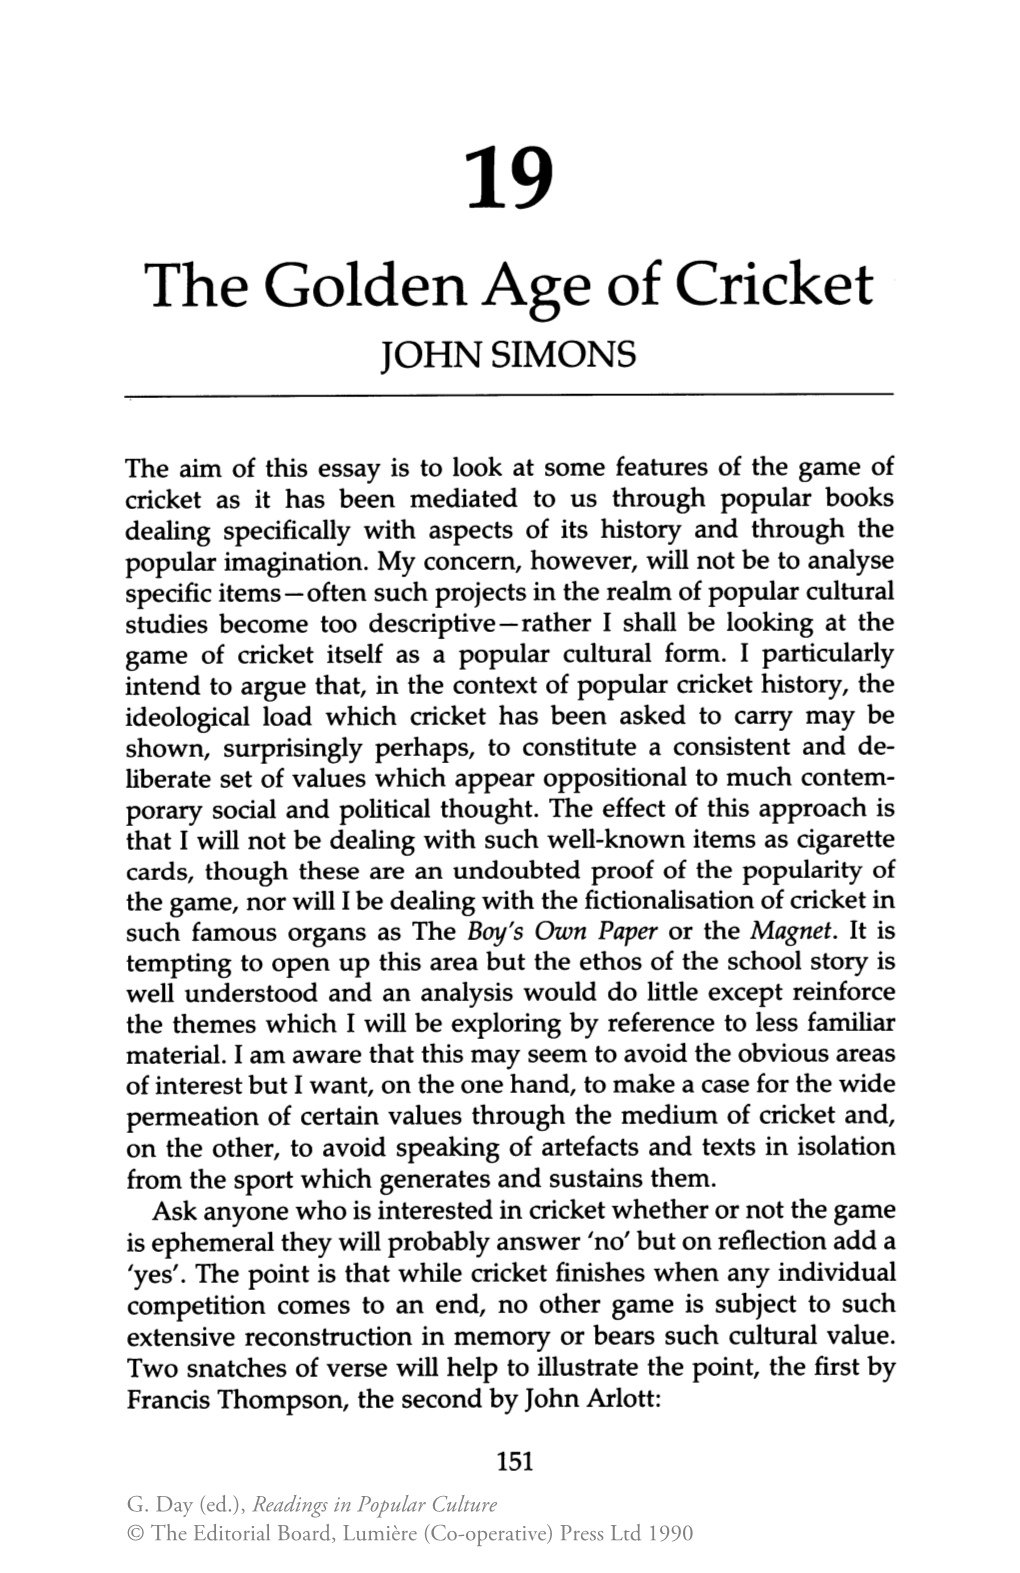 The Golden Age of Cricket JOHN SIMONS